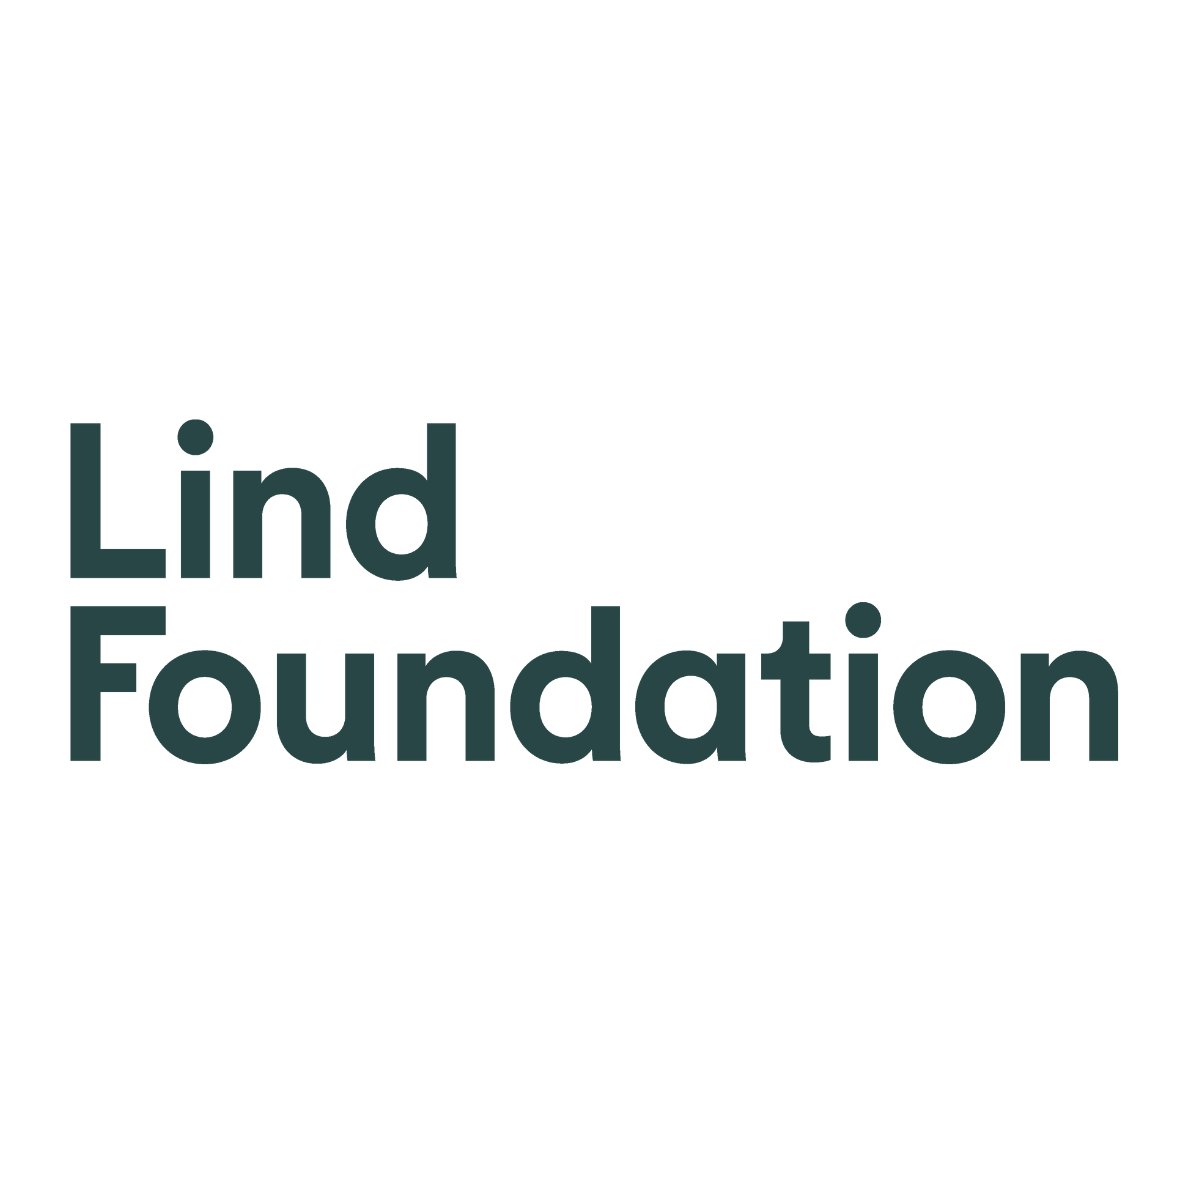 Lind Foundation